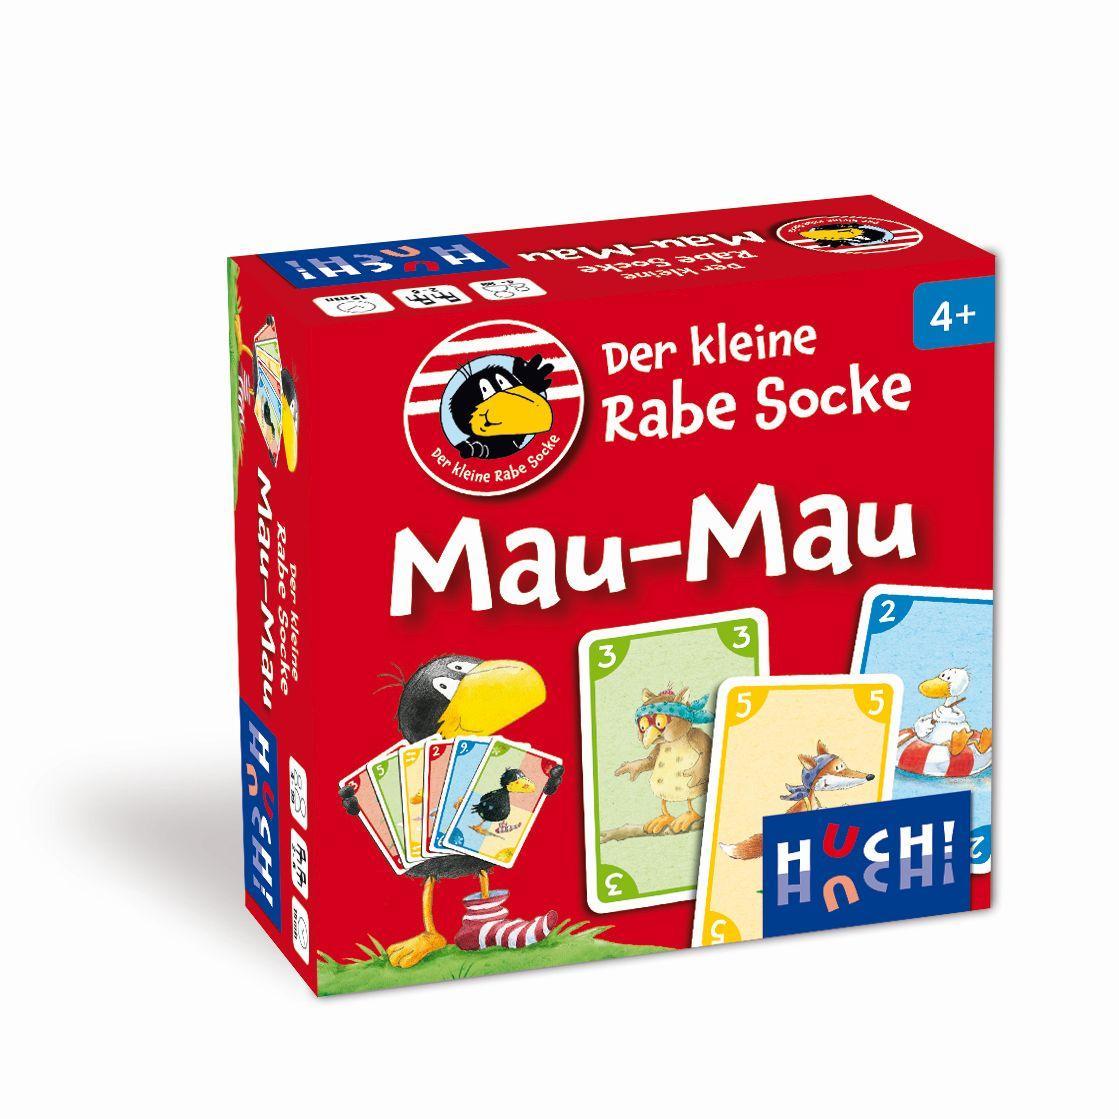 Hra/Hračka Der kleine Rabe Socke - Mau Mau Huch!